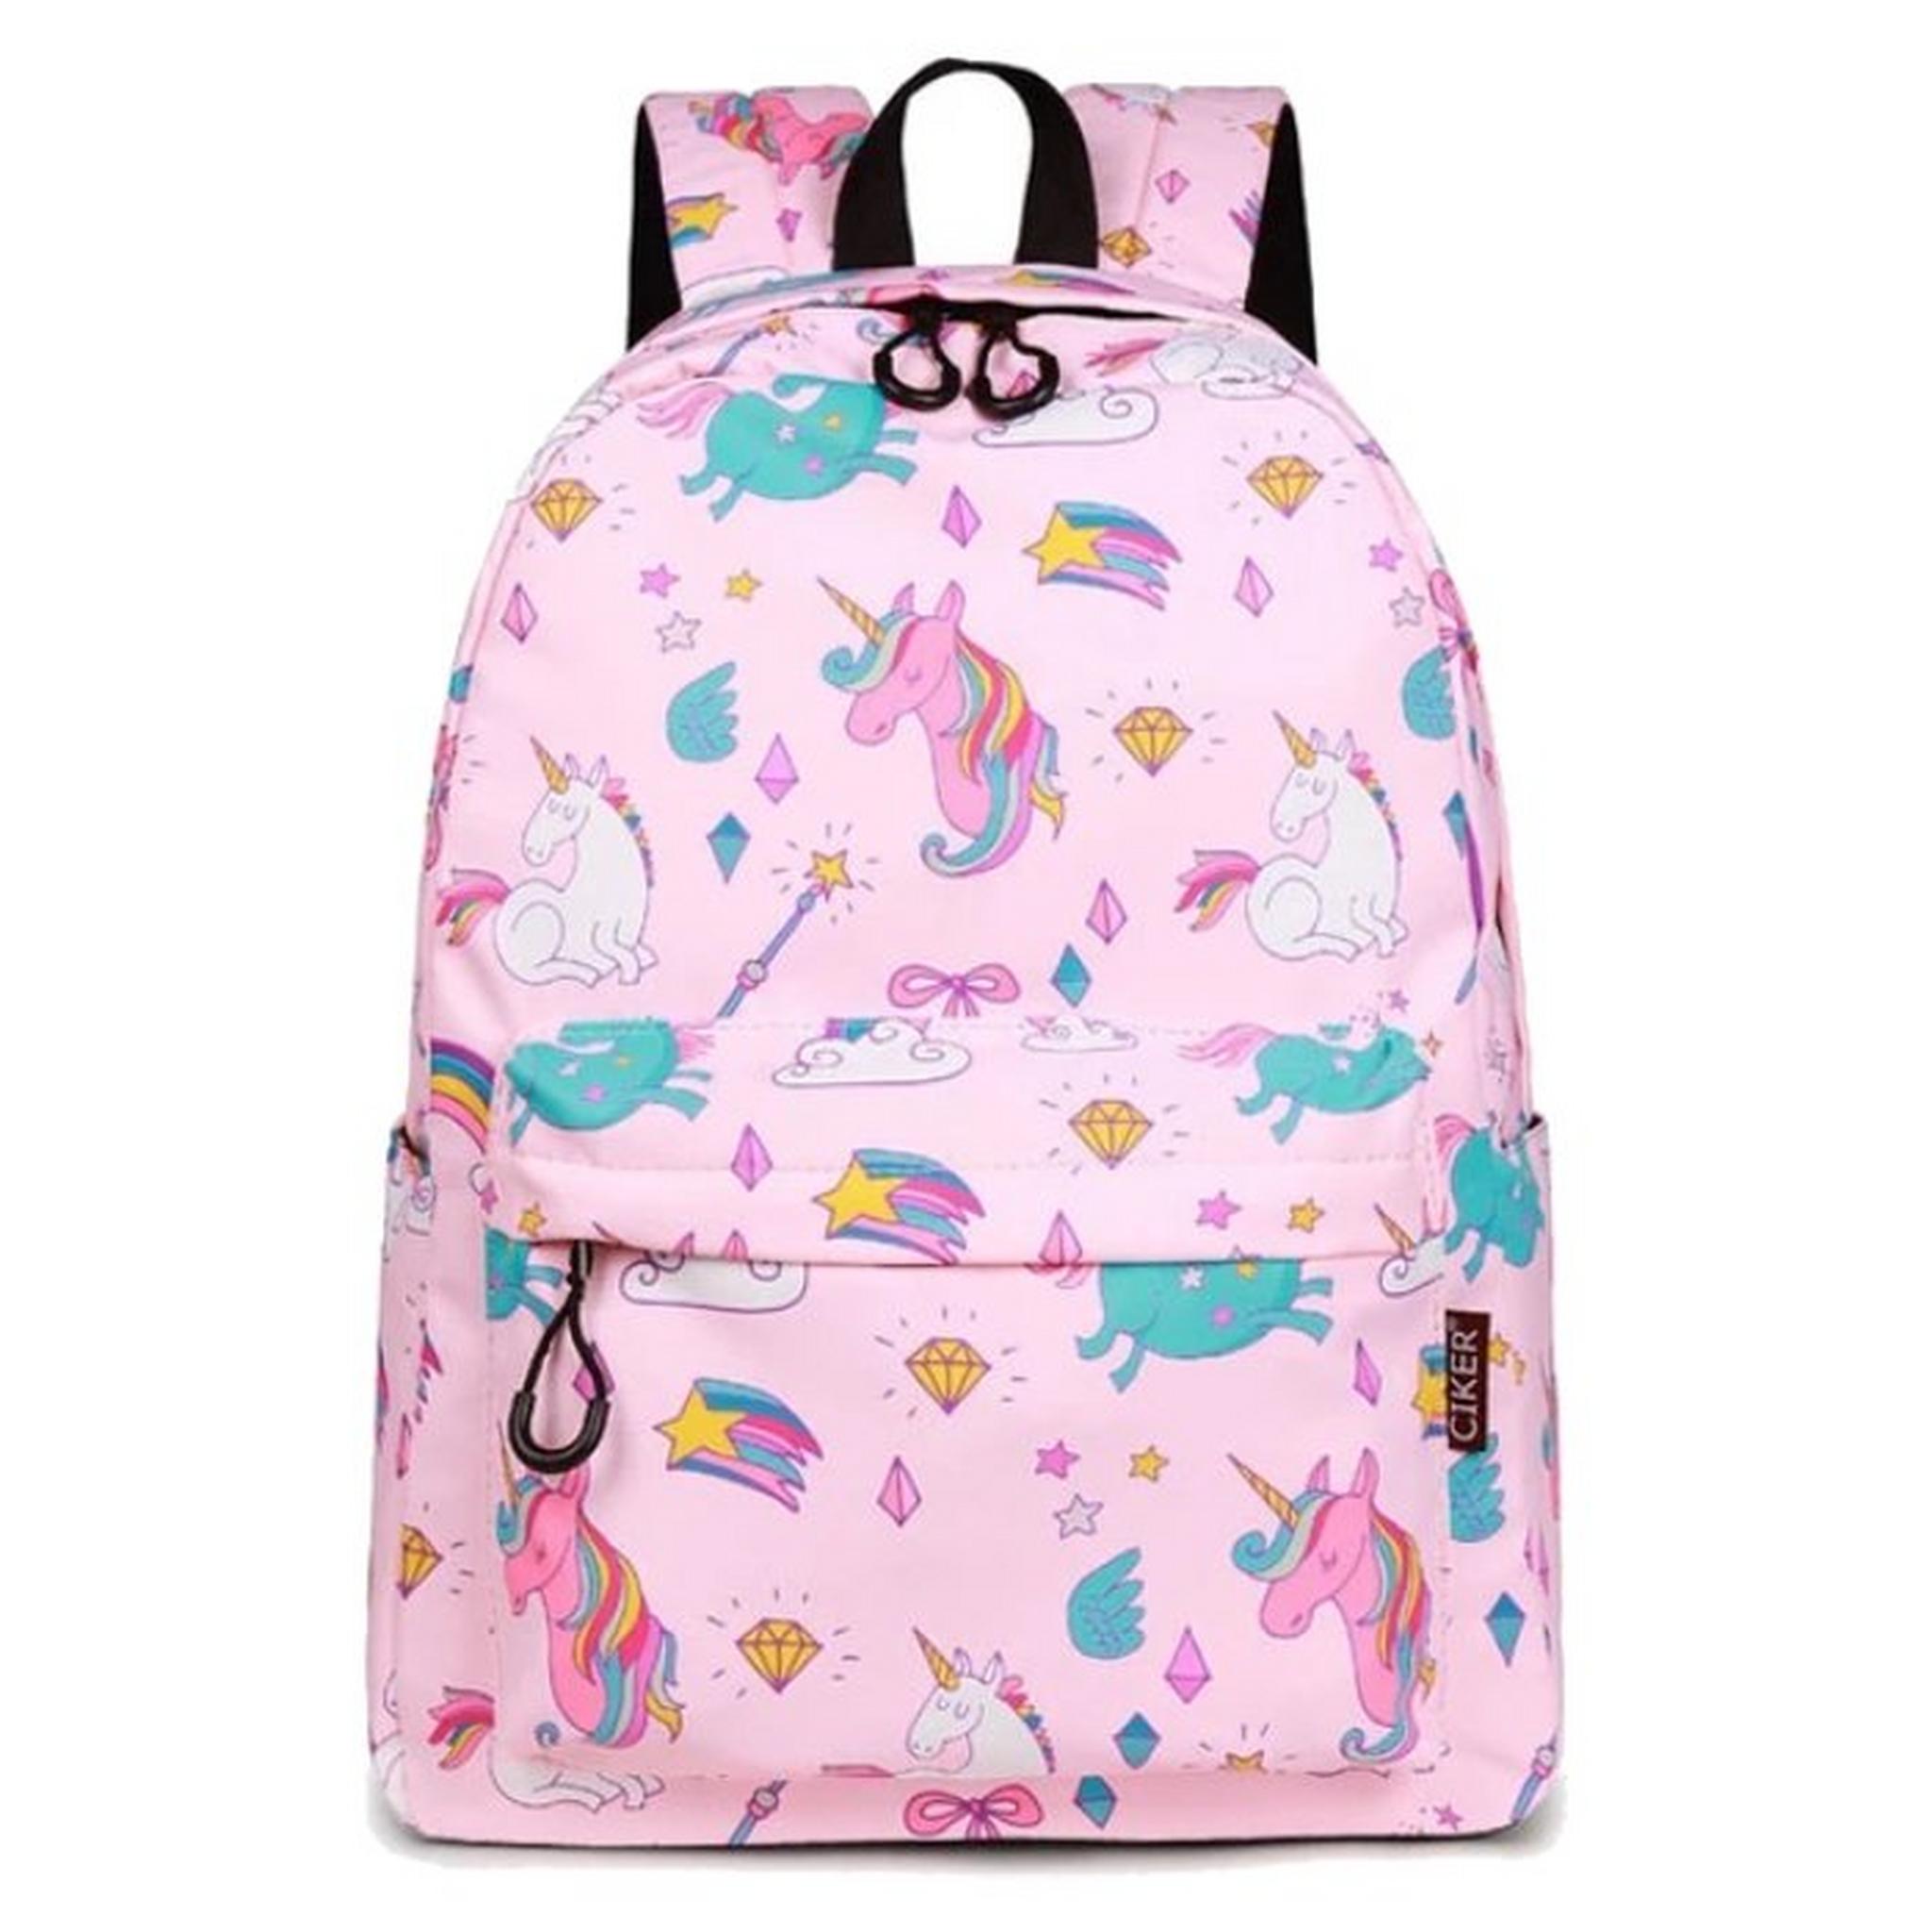 Riwbox Unicorn Leisure Backpack - Pink